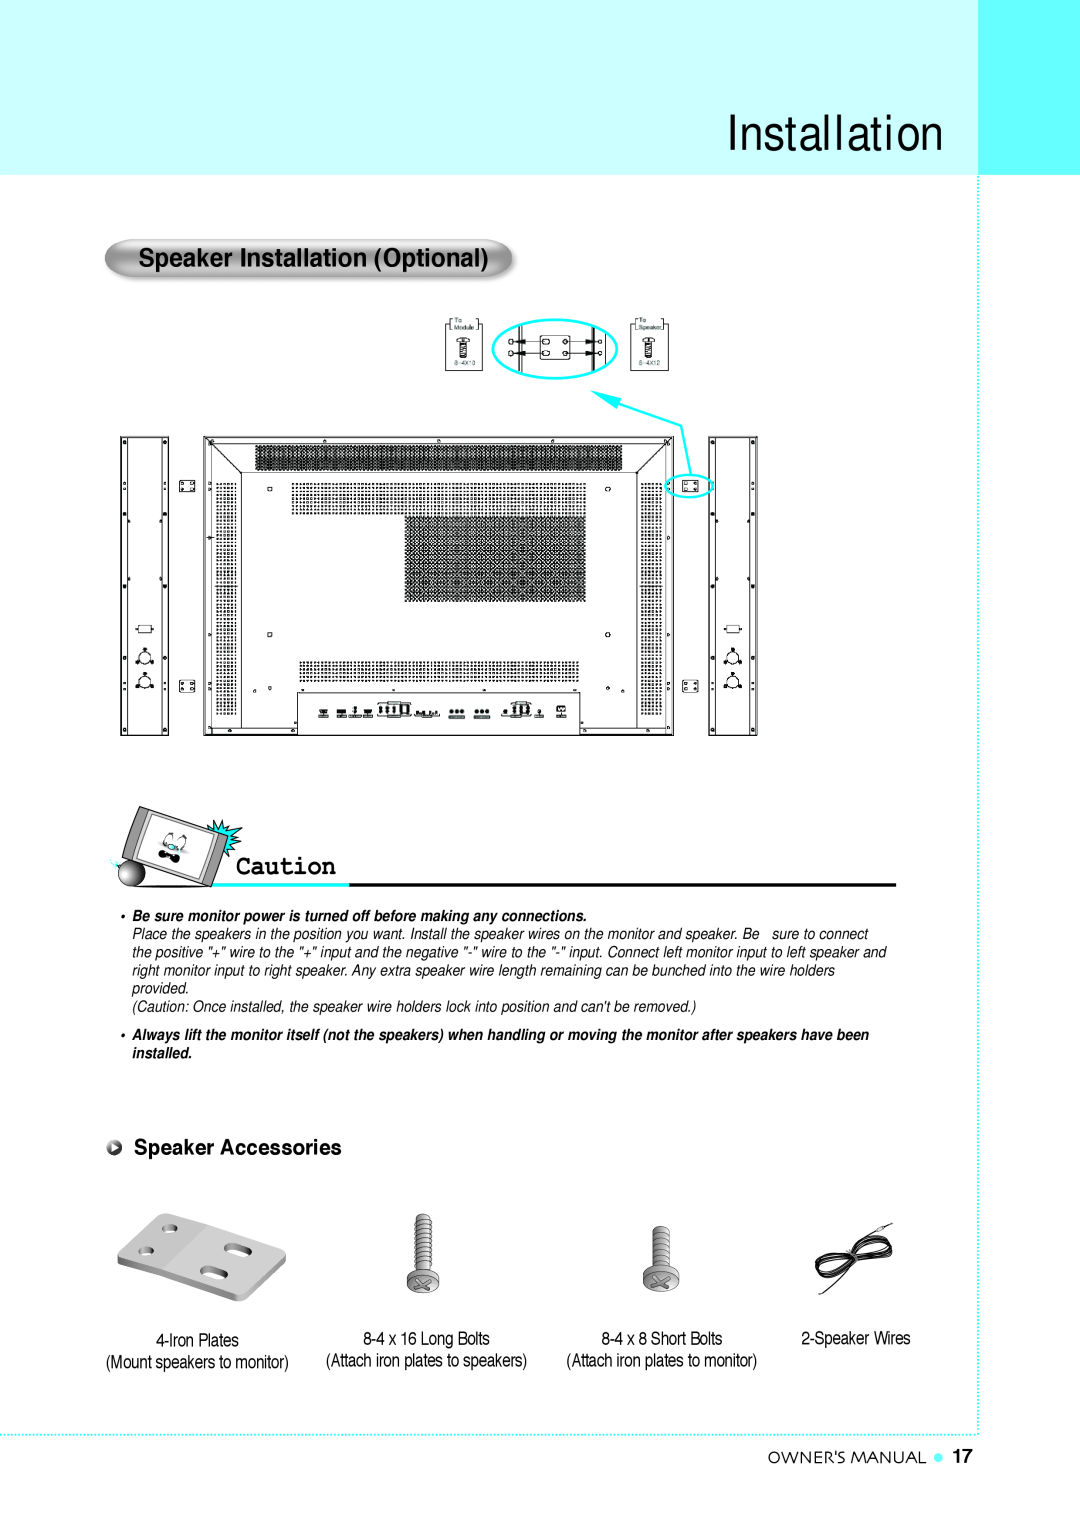 InFocus TD32, TD40 NTSC manual Speaker Installation Optional, Speaker Accessories, Owners Manual 